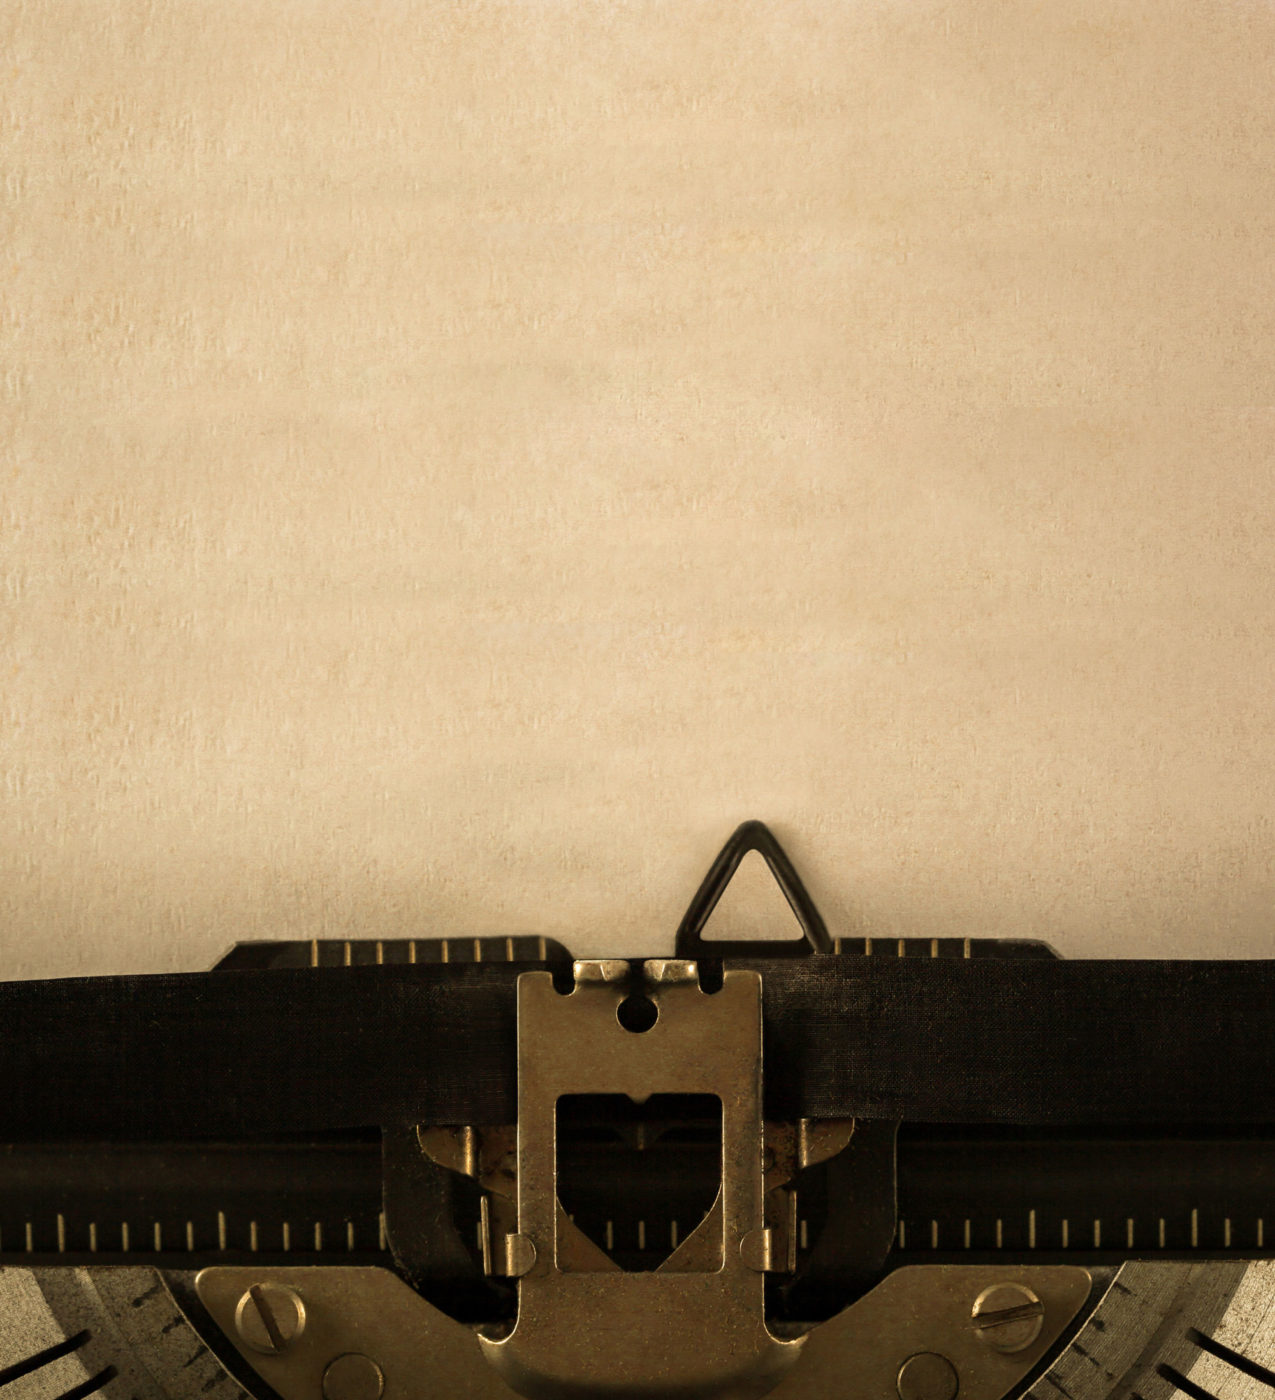 Old typewriter using old golden paper